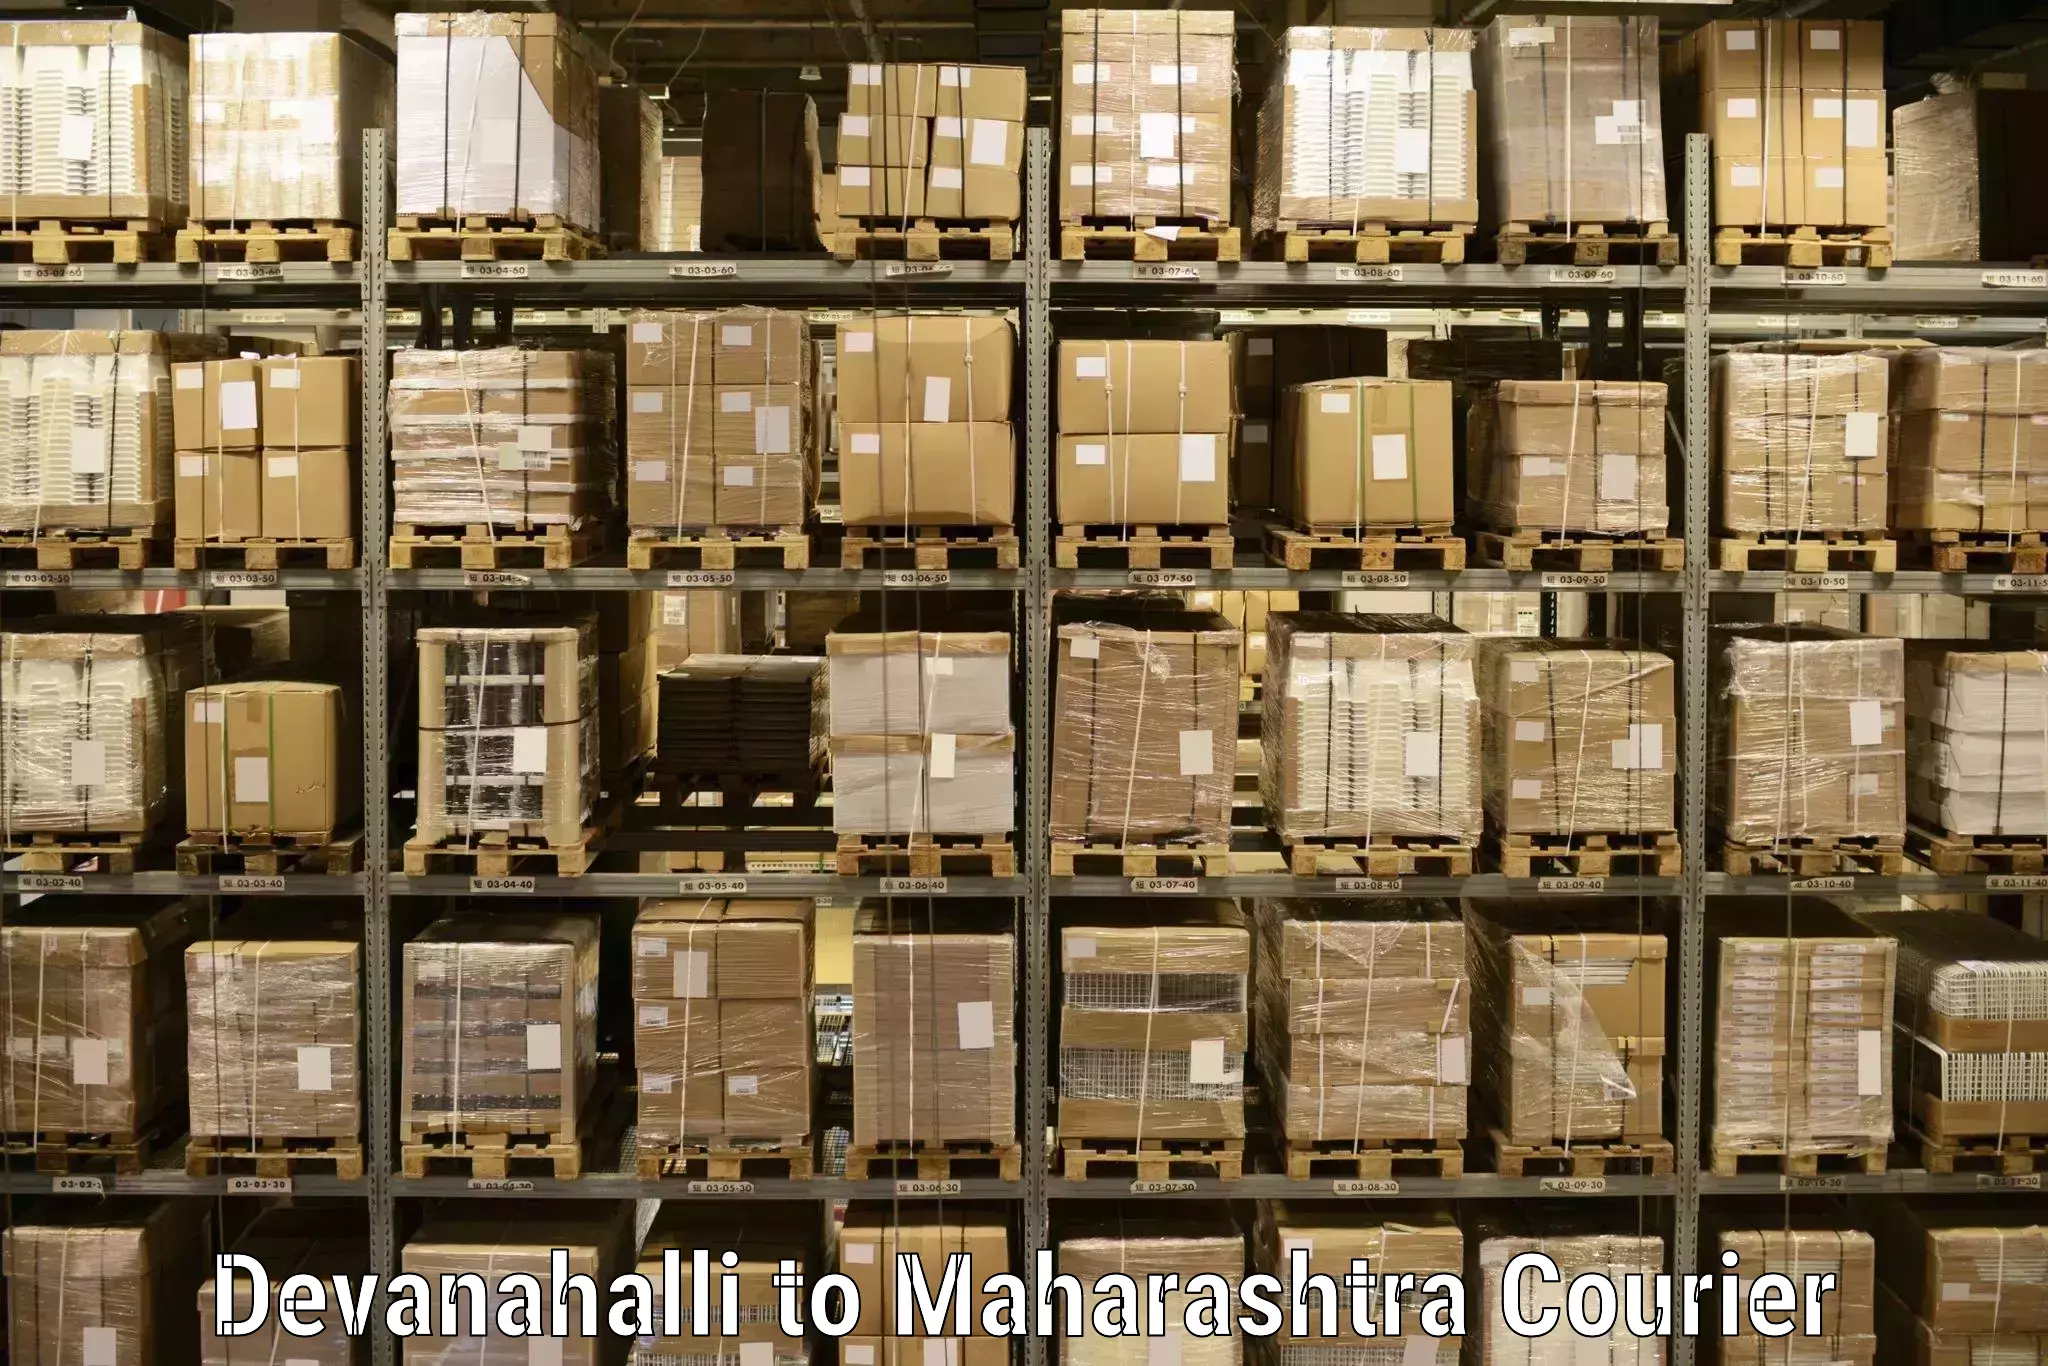 Courier service comparison Devanahalli to Maharashtra